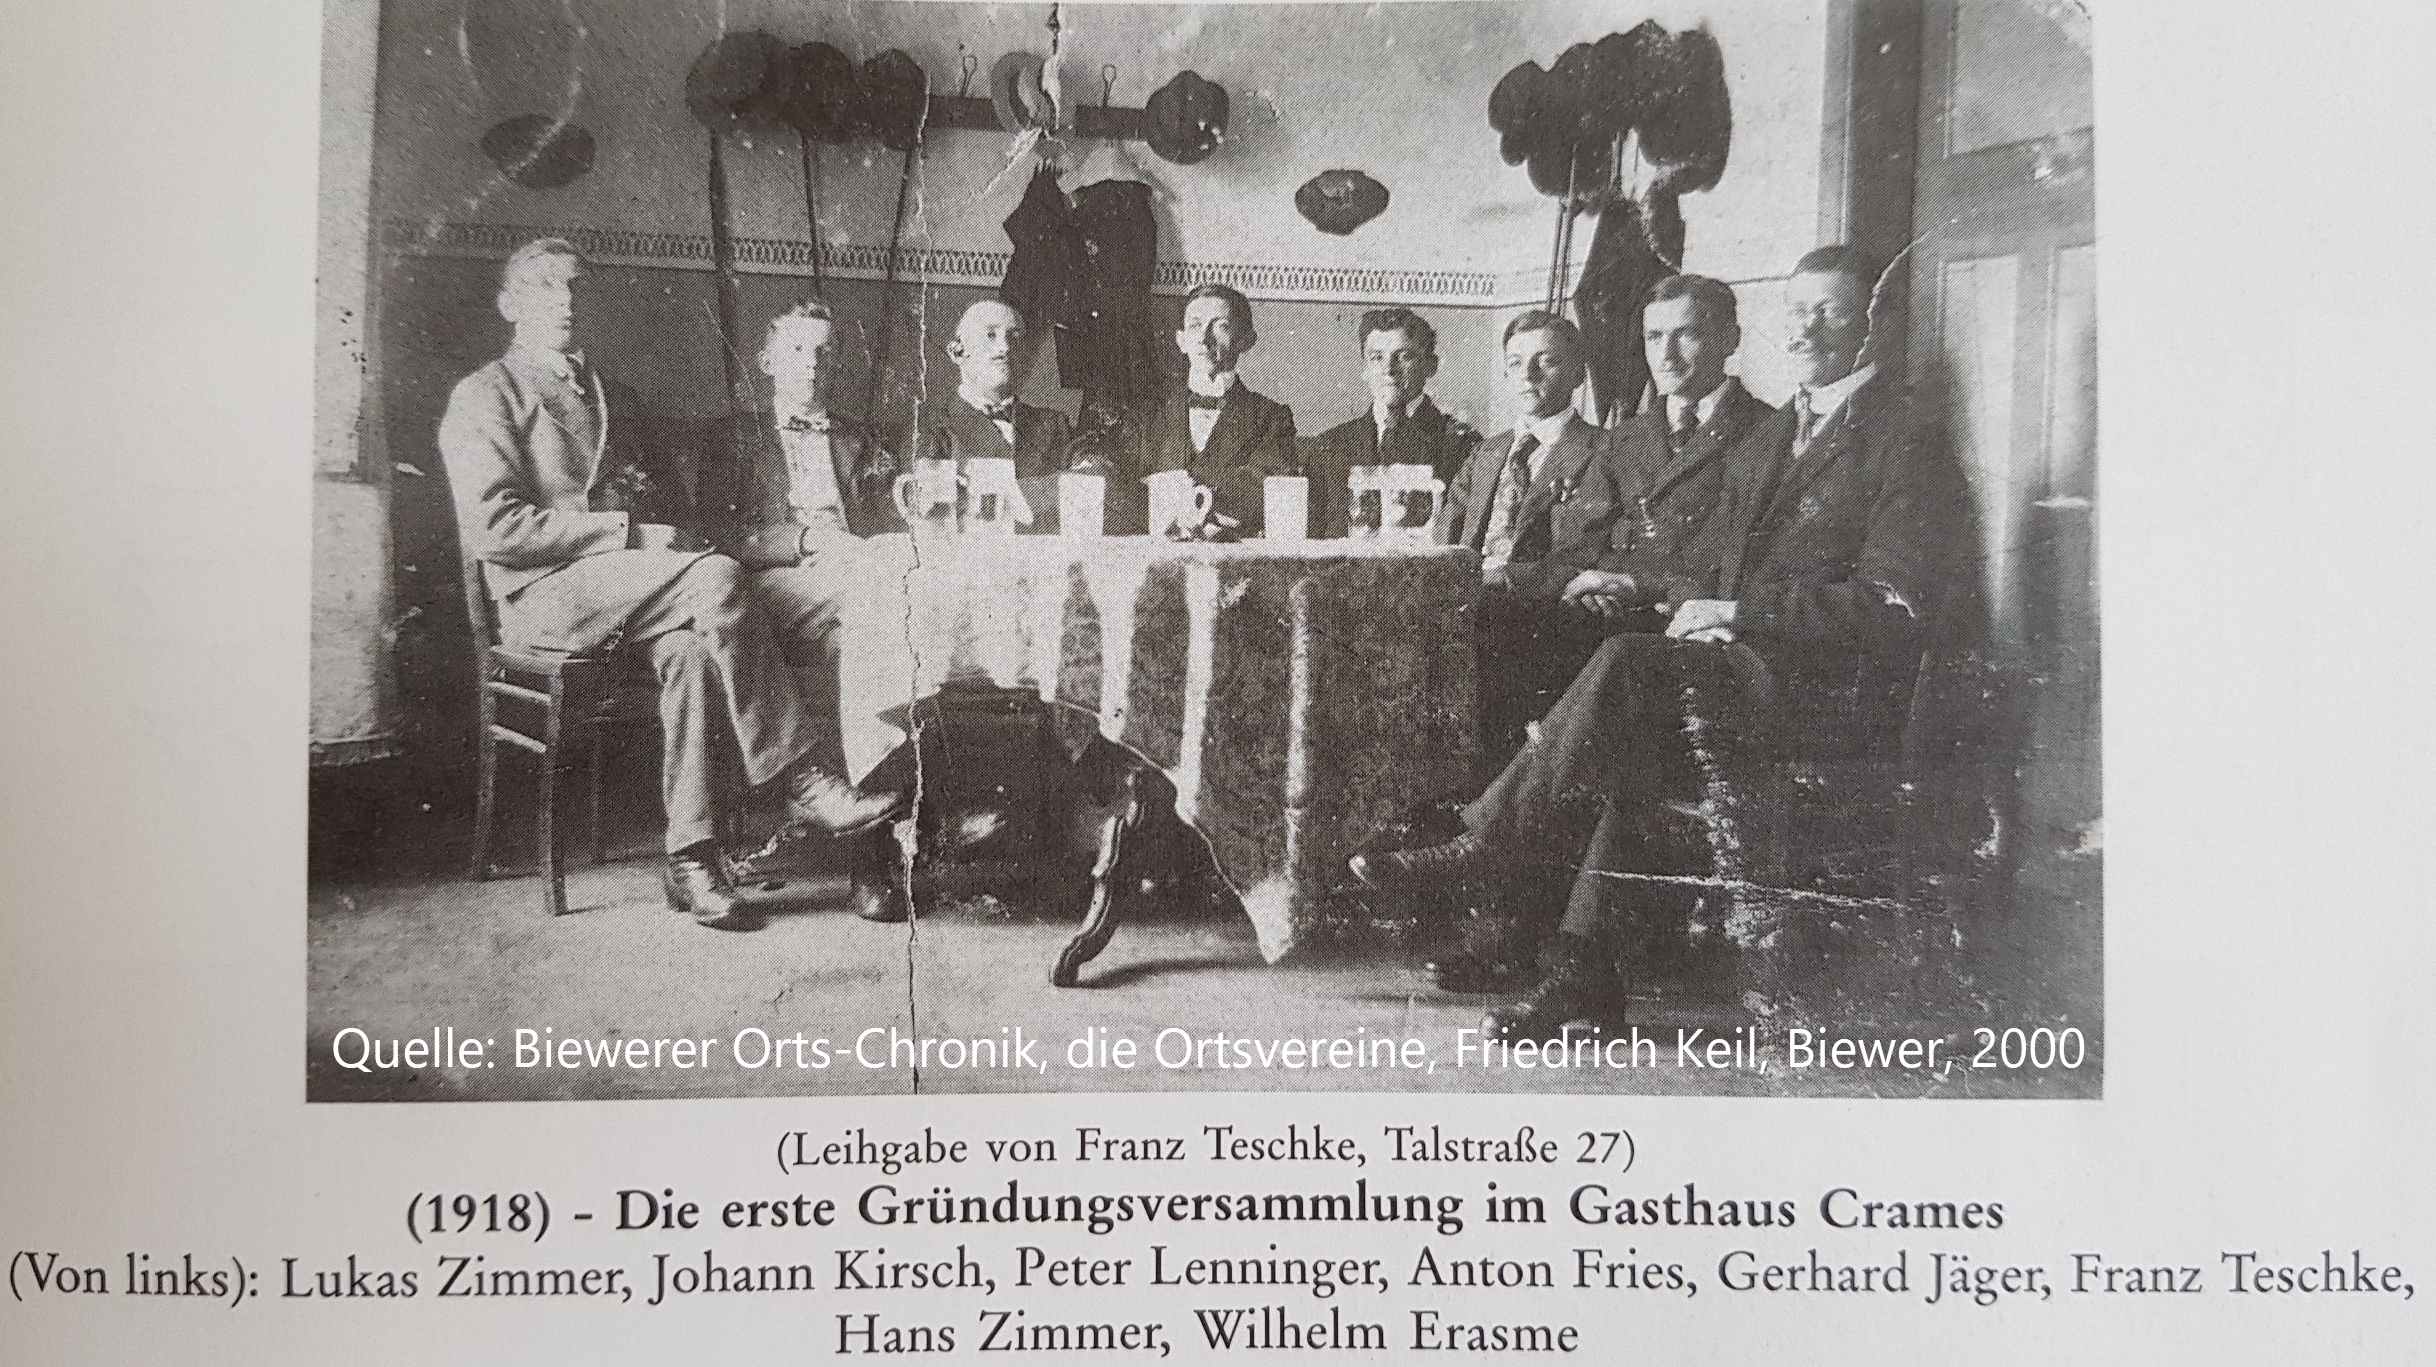 Gründungsversammlung im Gasthaus Crames